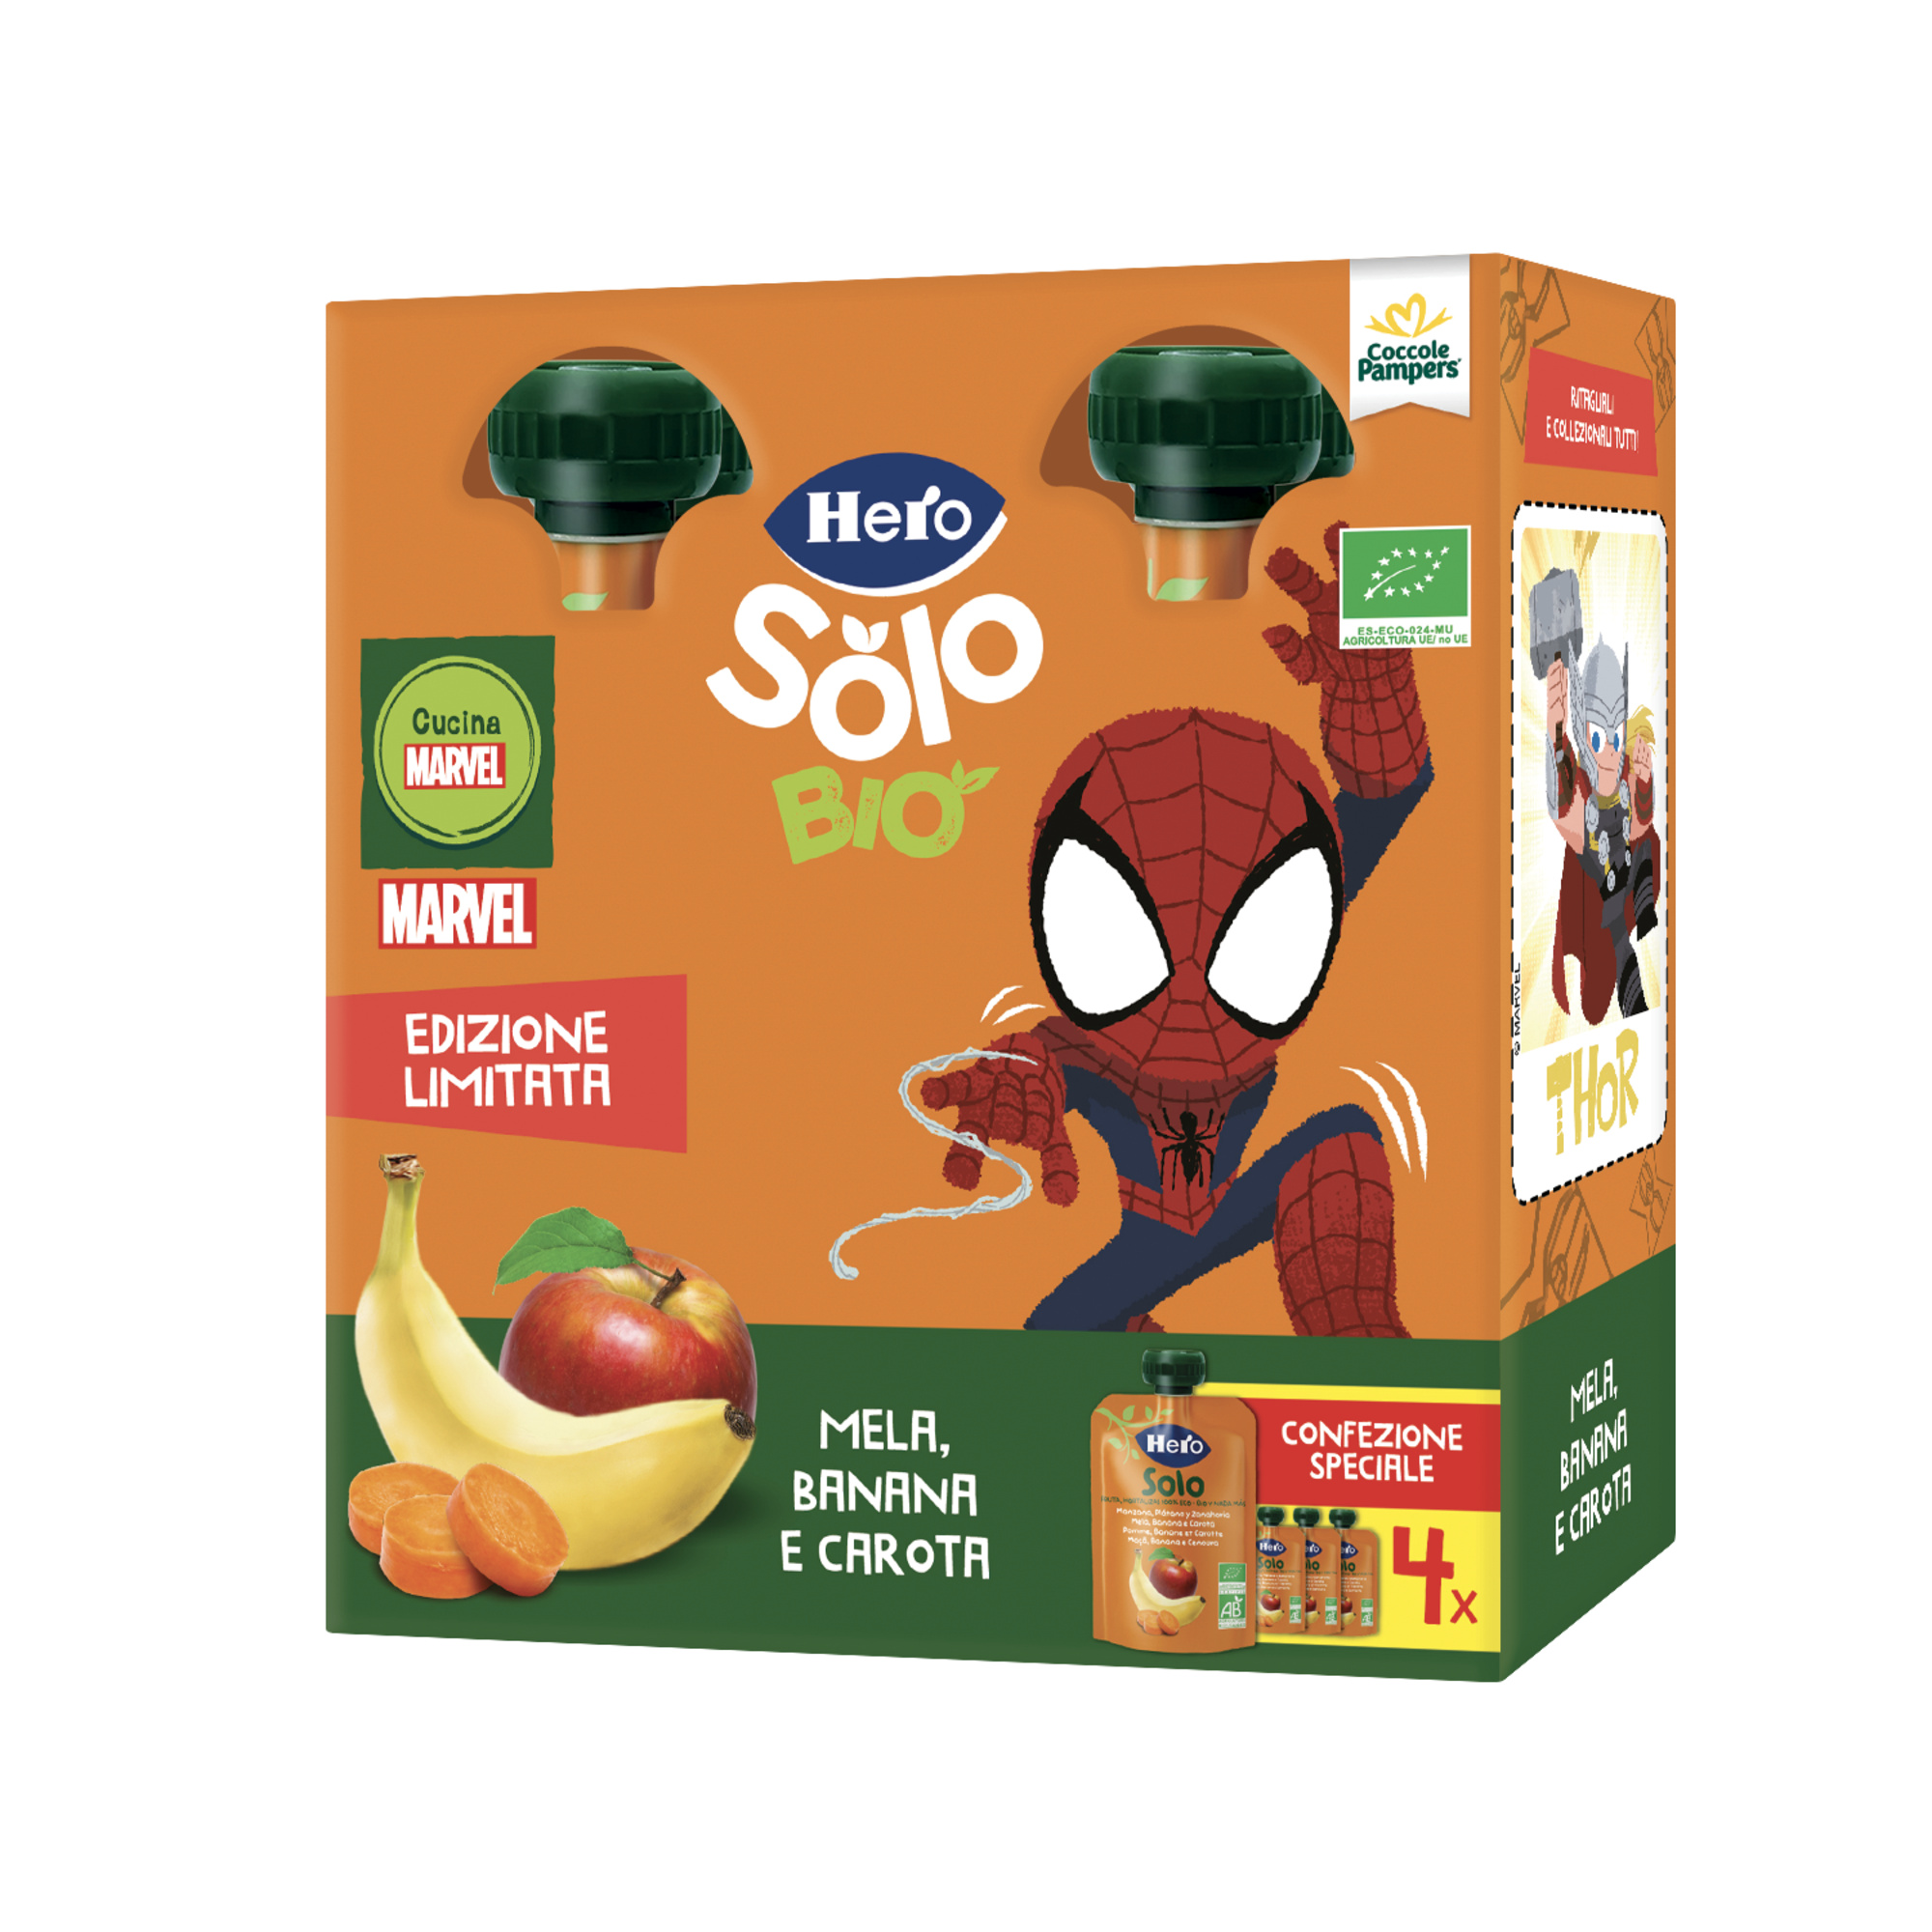 Hero solo pouch biologico mela banana e carota - multipack 4x100 gr - marvel - Hero